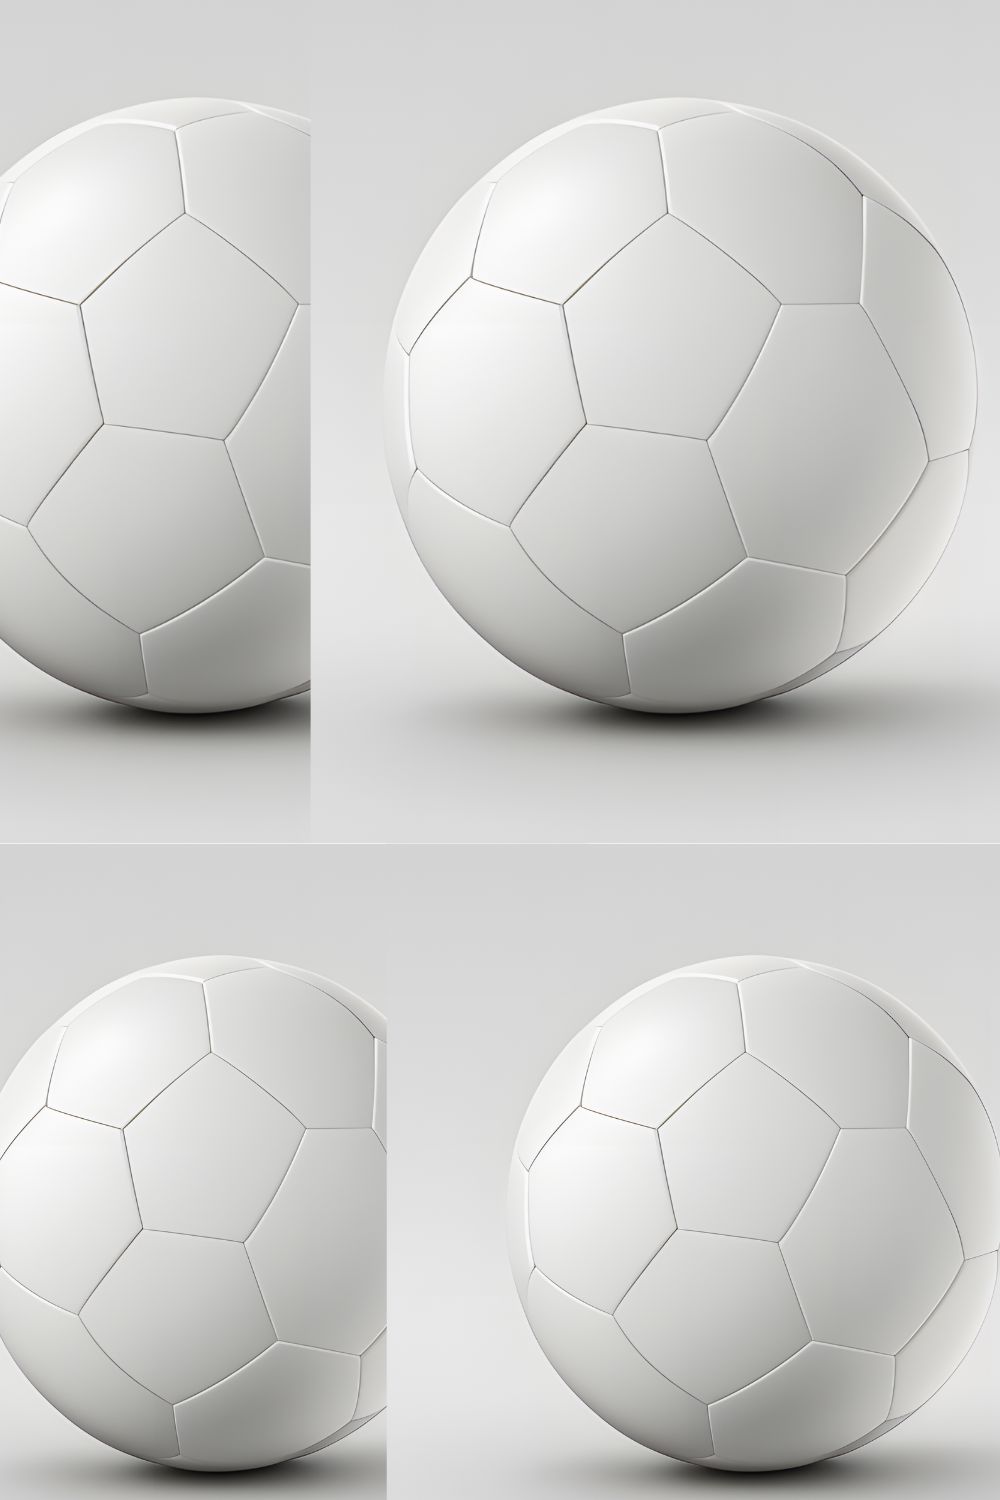 Ball Logo pinterest preview image.